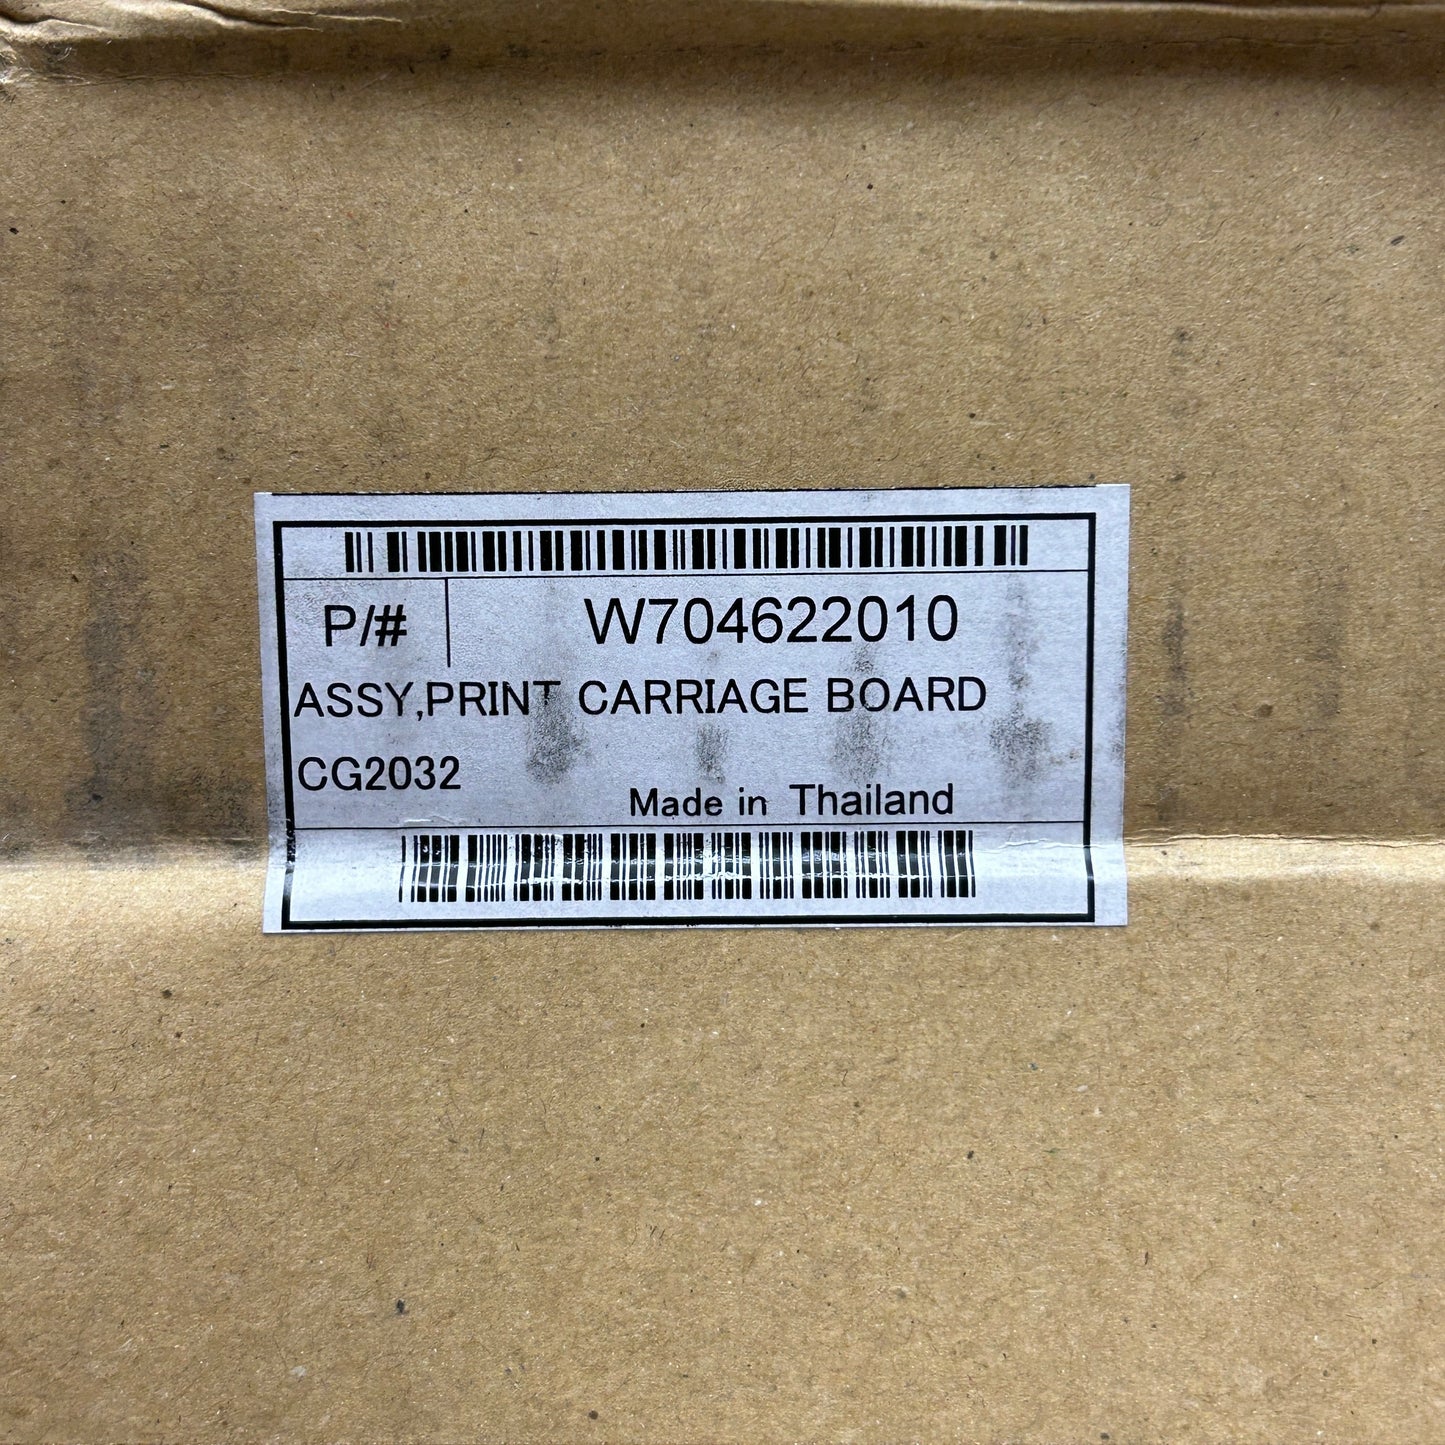 ROLAND ASSY Print Carriage Board CG2032 W704622010 (New)